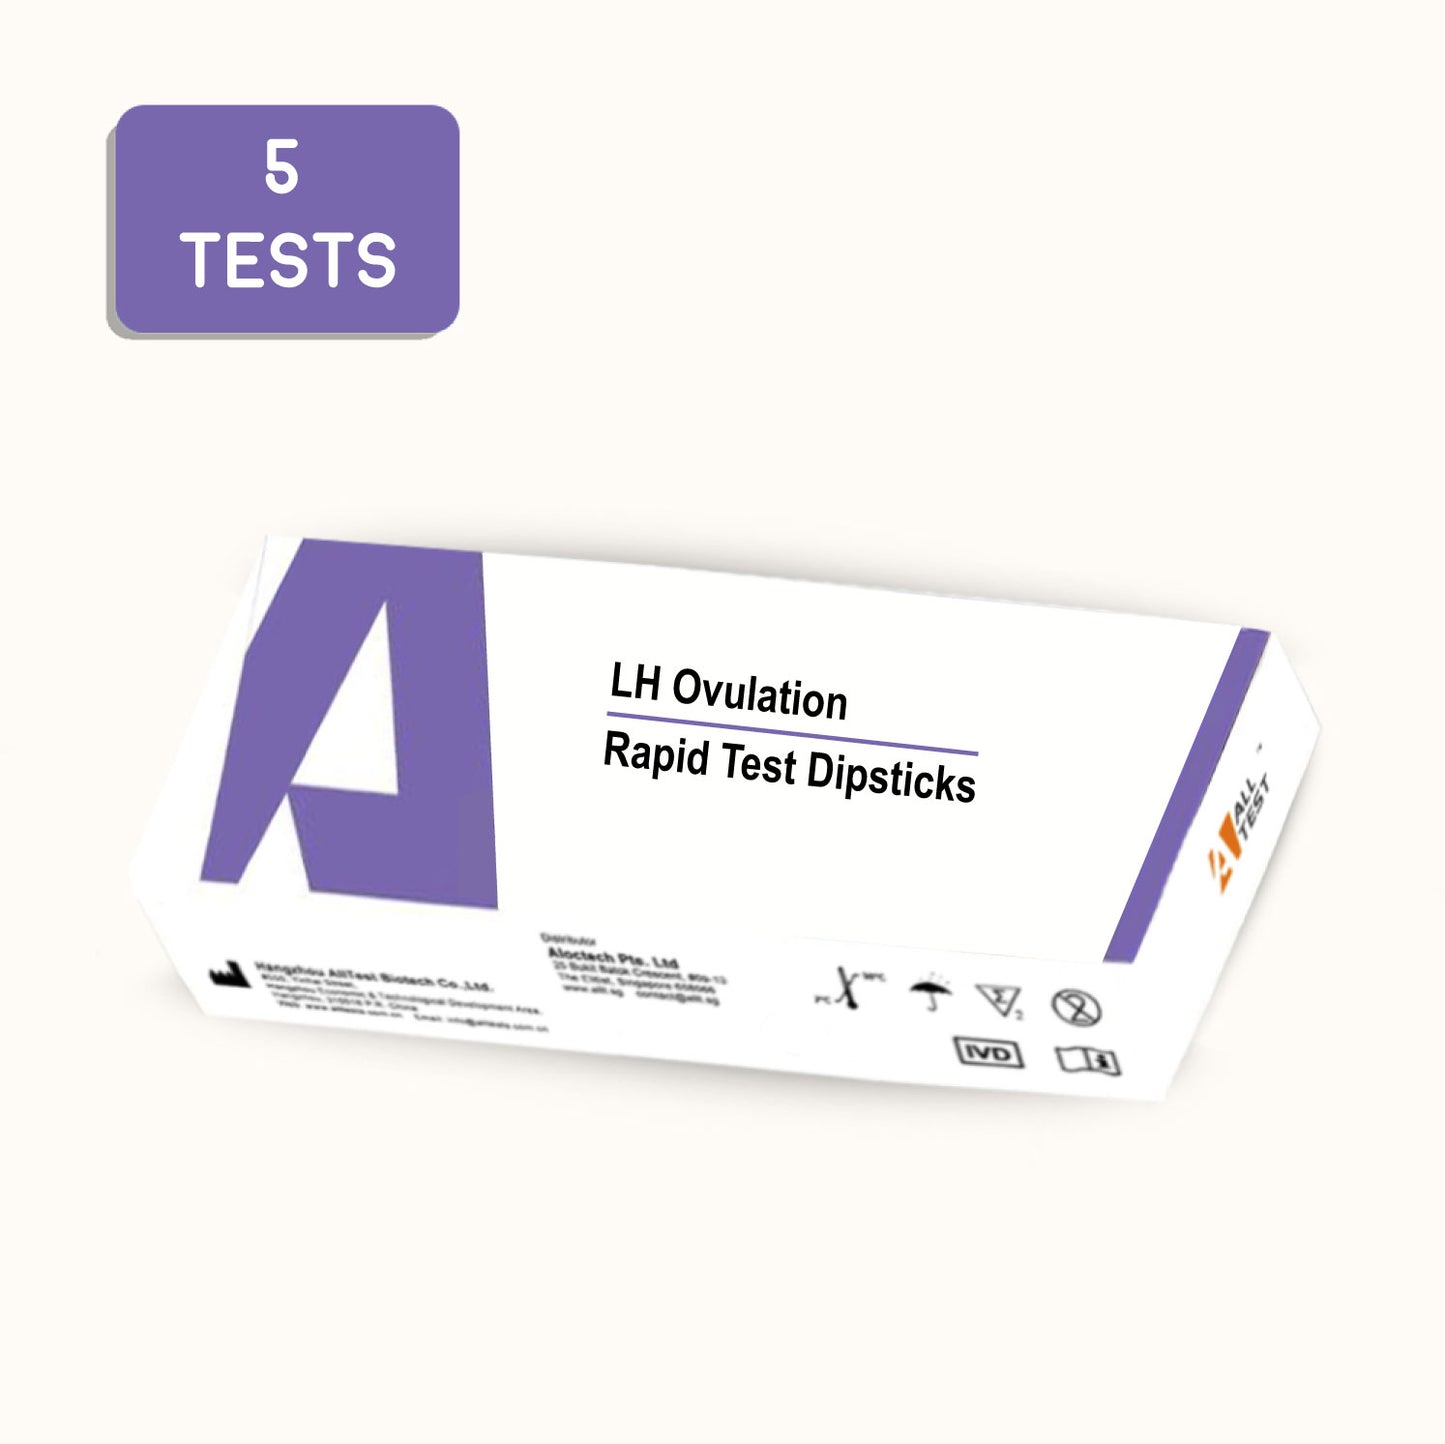 Ovulation (LH) Rapid Test Dipstick - 5 TESTS